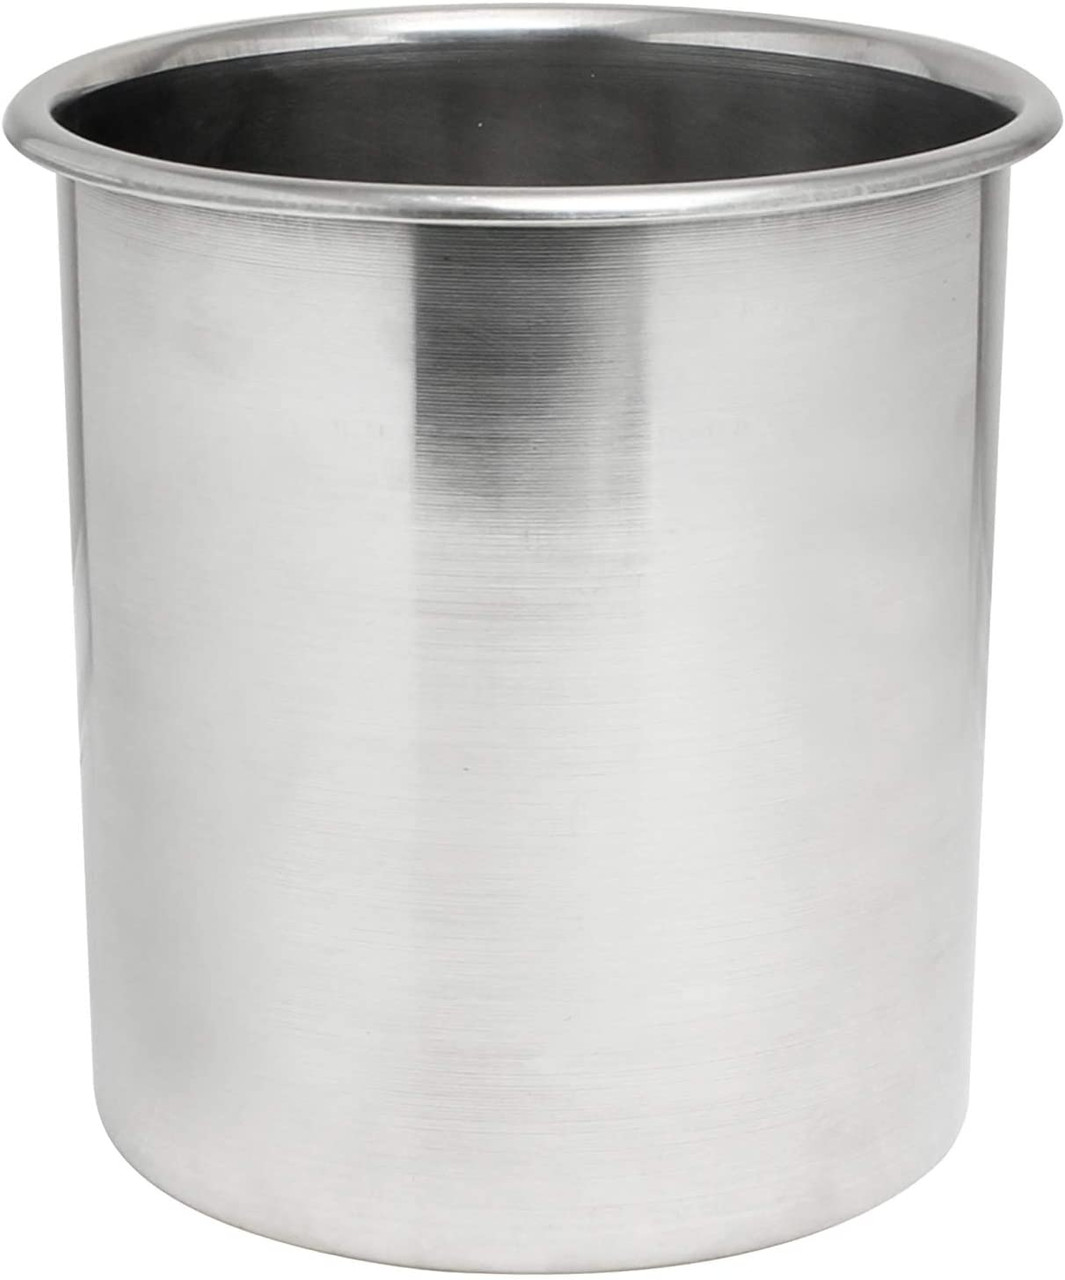 Choice 12 Qt. Stainless Steel Bain Marie Pot